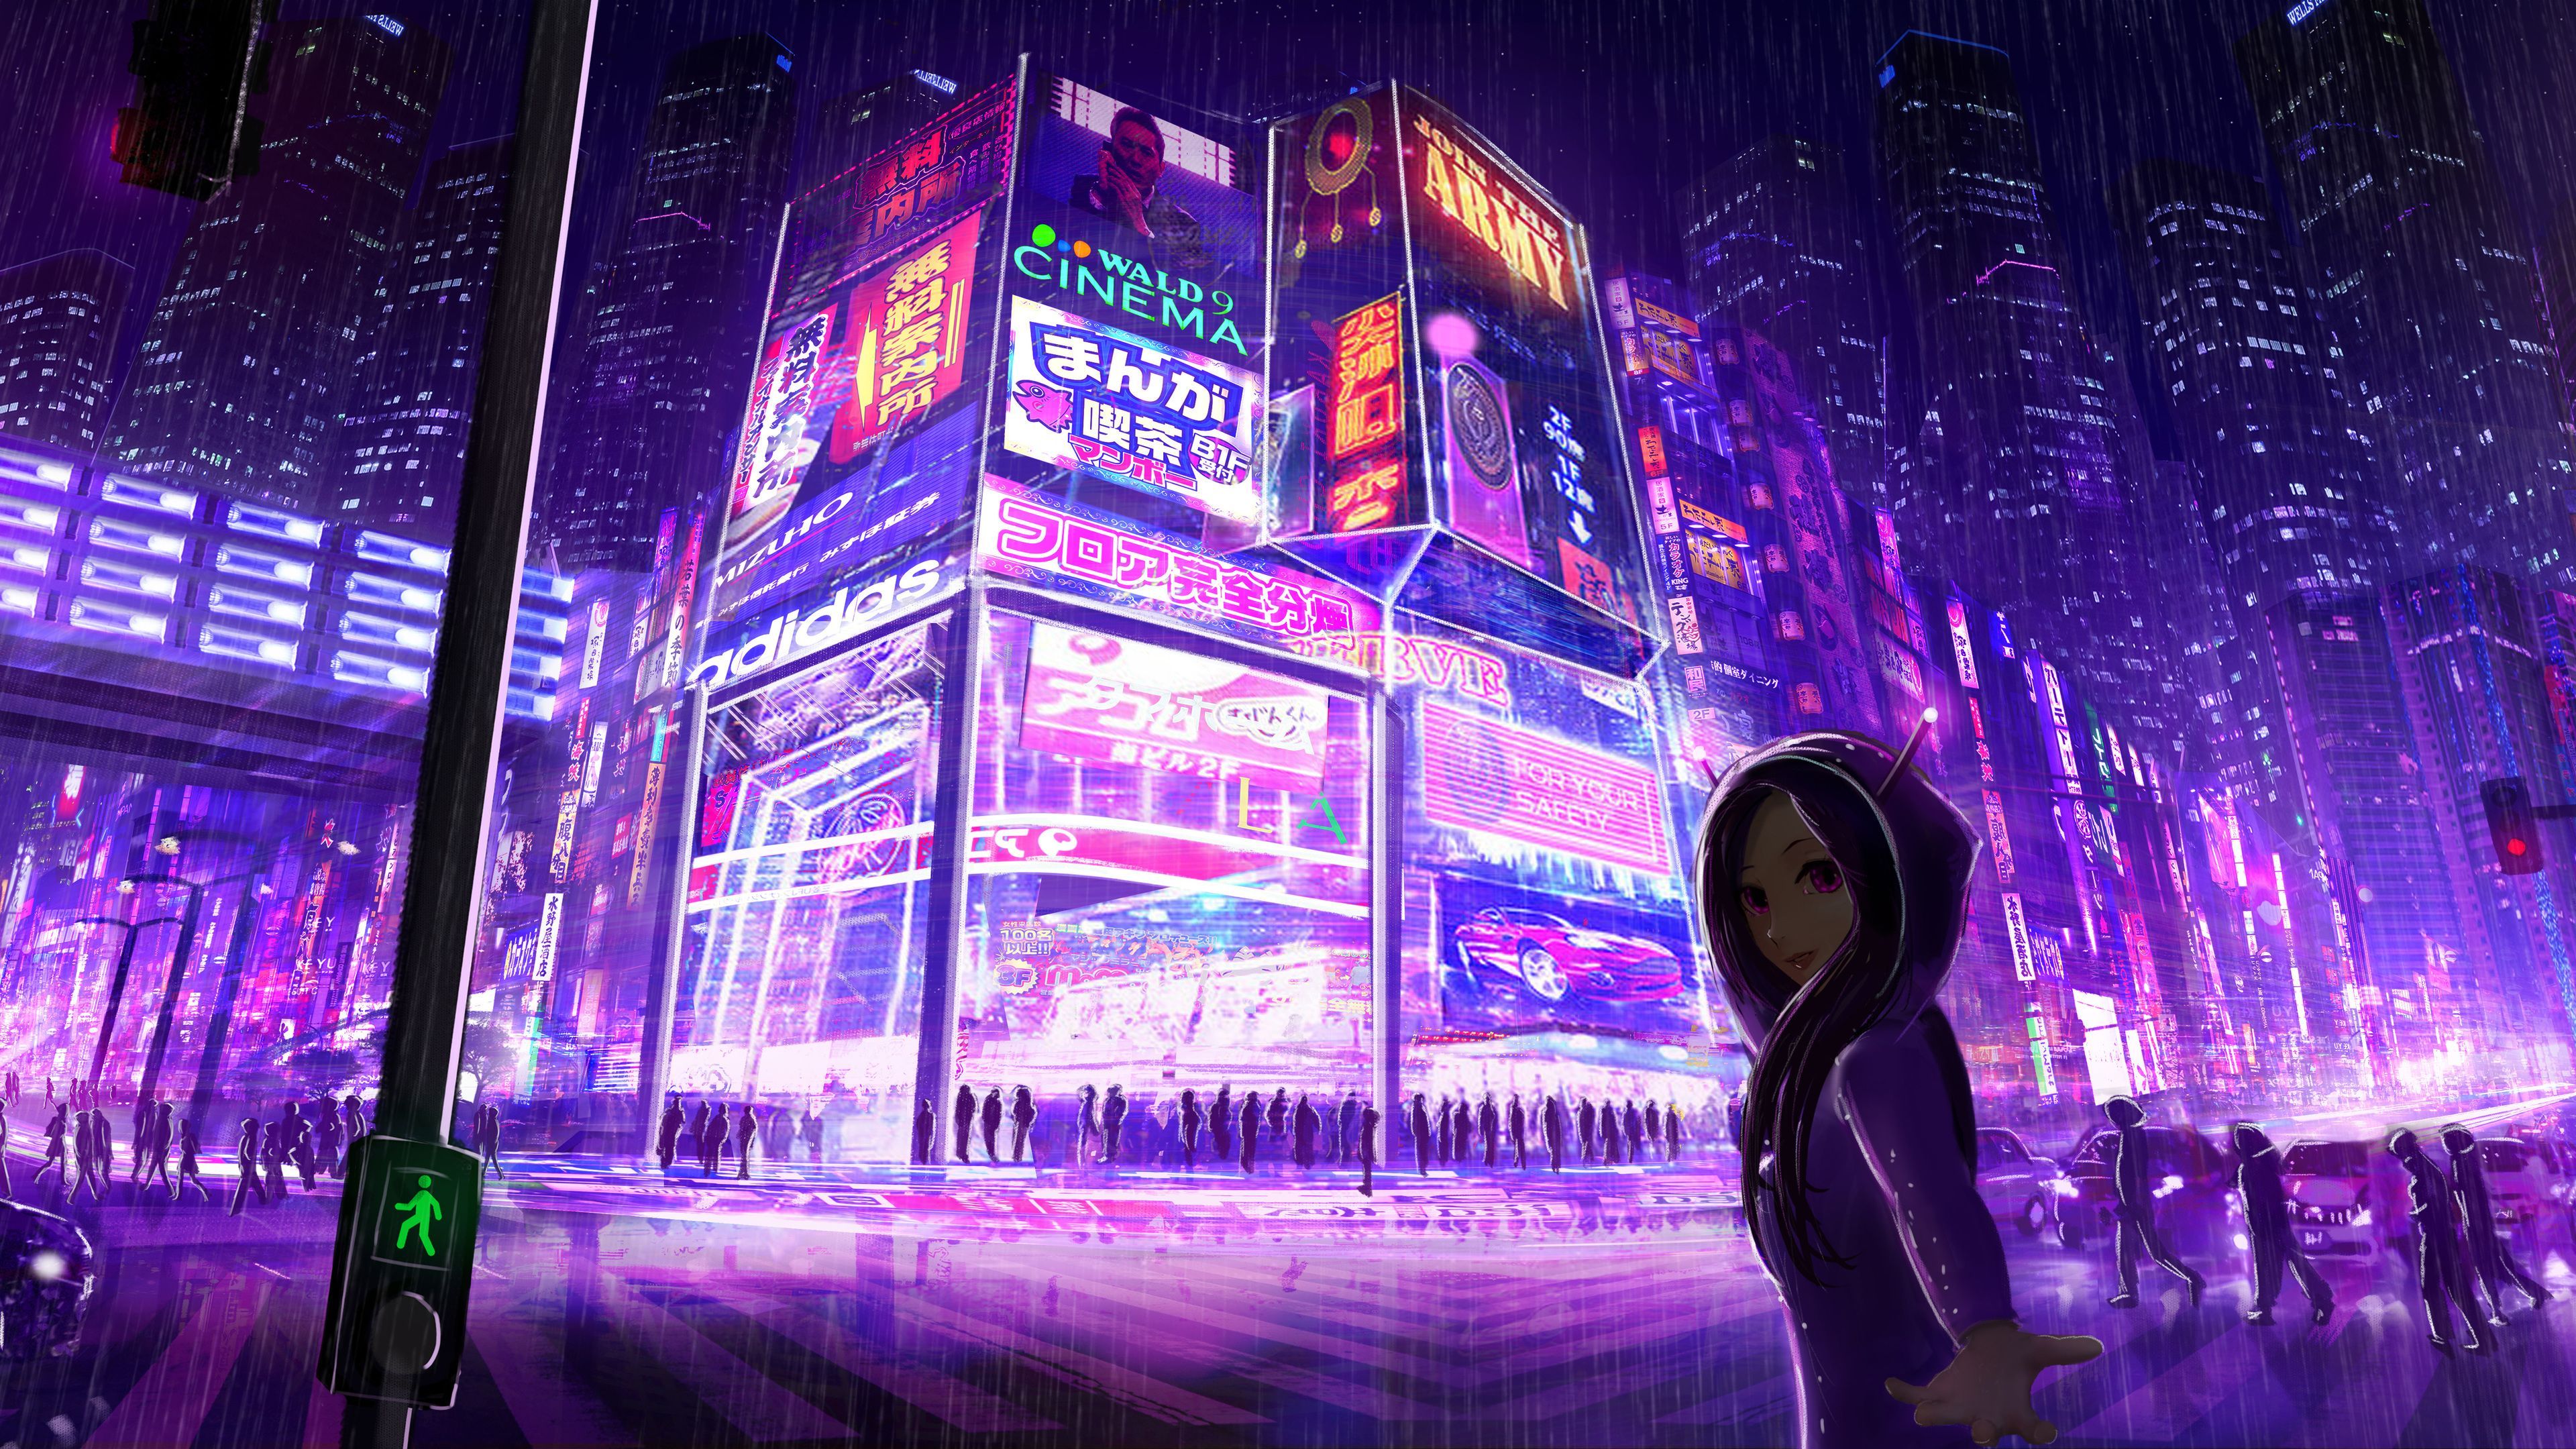 Cyberpunk anime city wallpapers